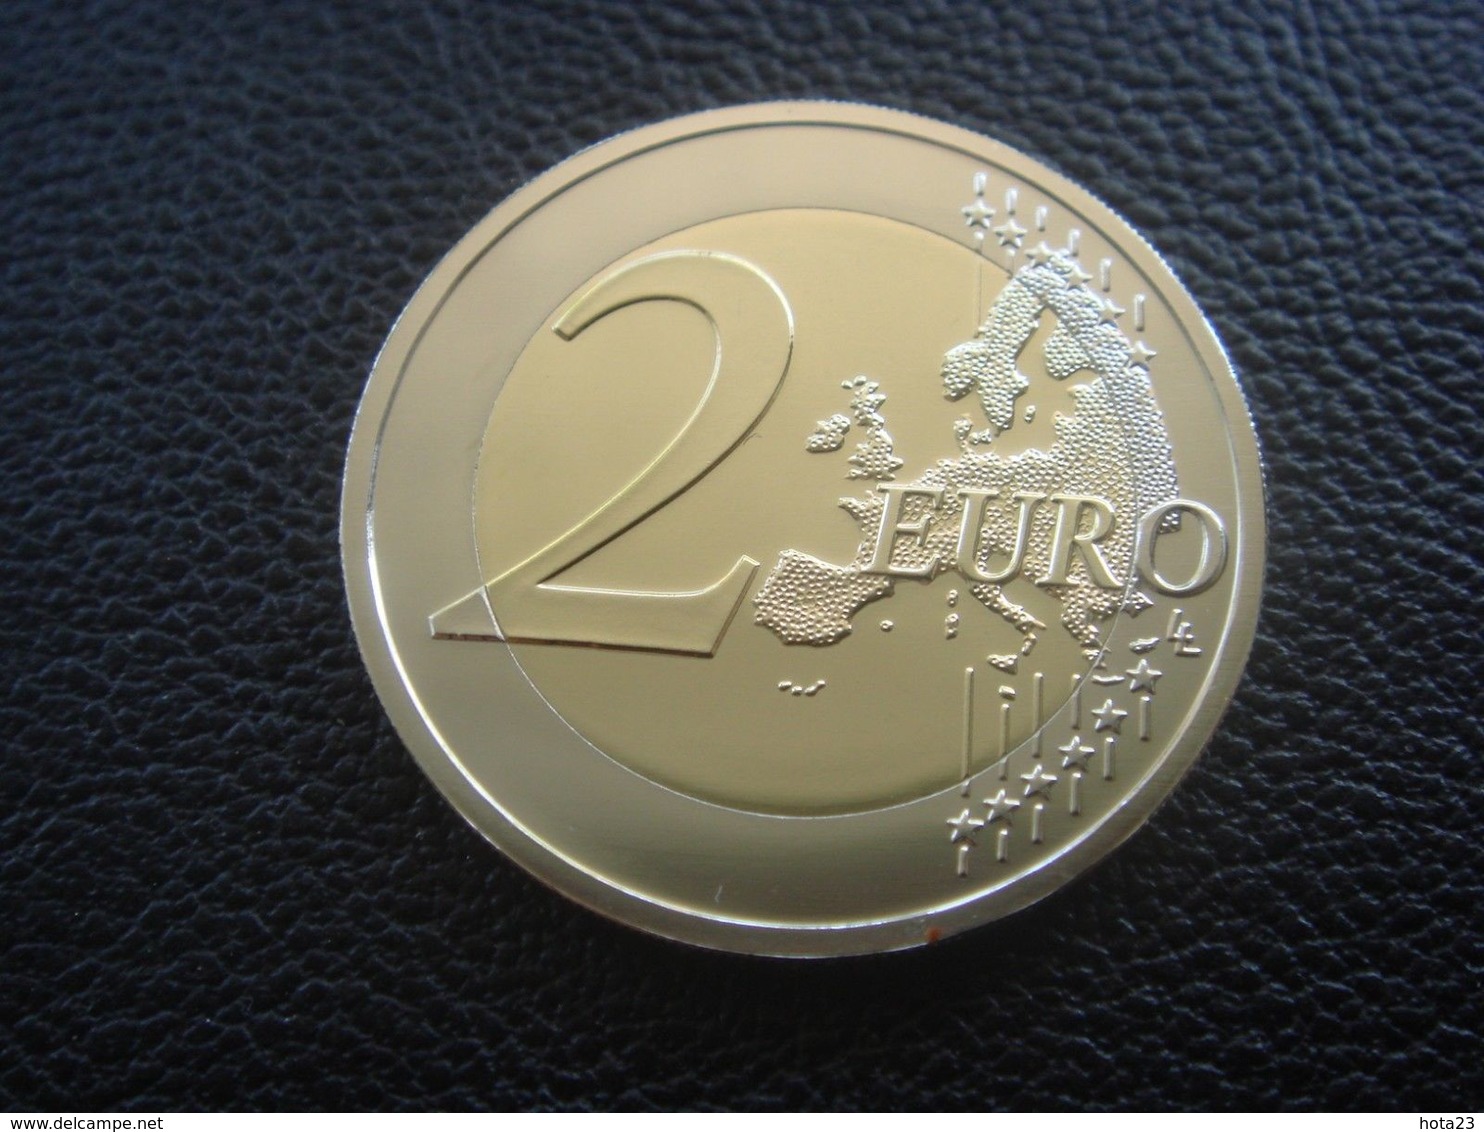 LETTLAND 2 EURO Kursmünze MÜNZEN 2018 Jahre BU LATVIA COINS COIN Stempelglanz - Latvia